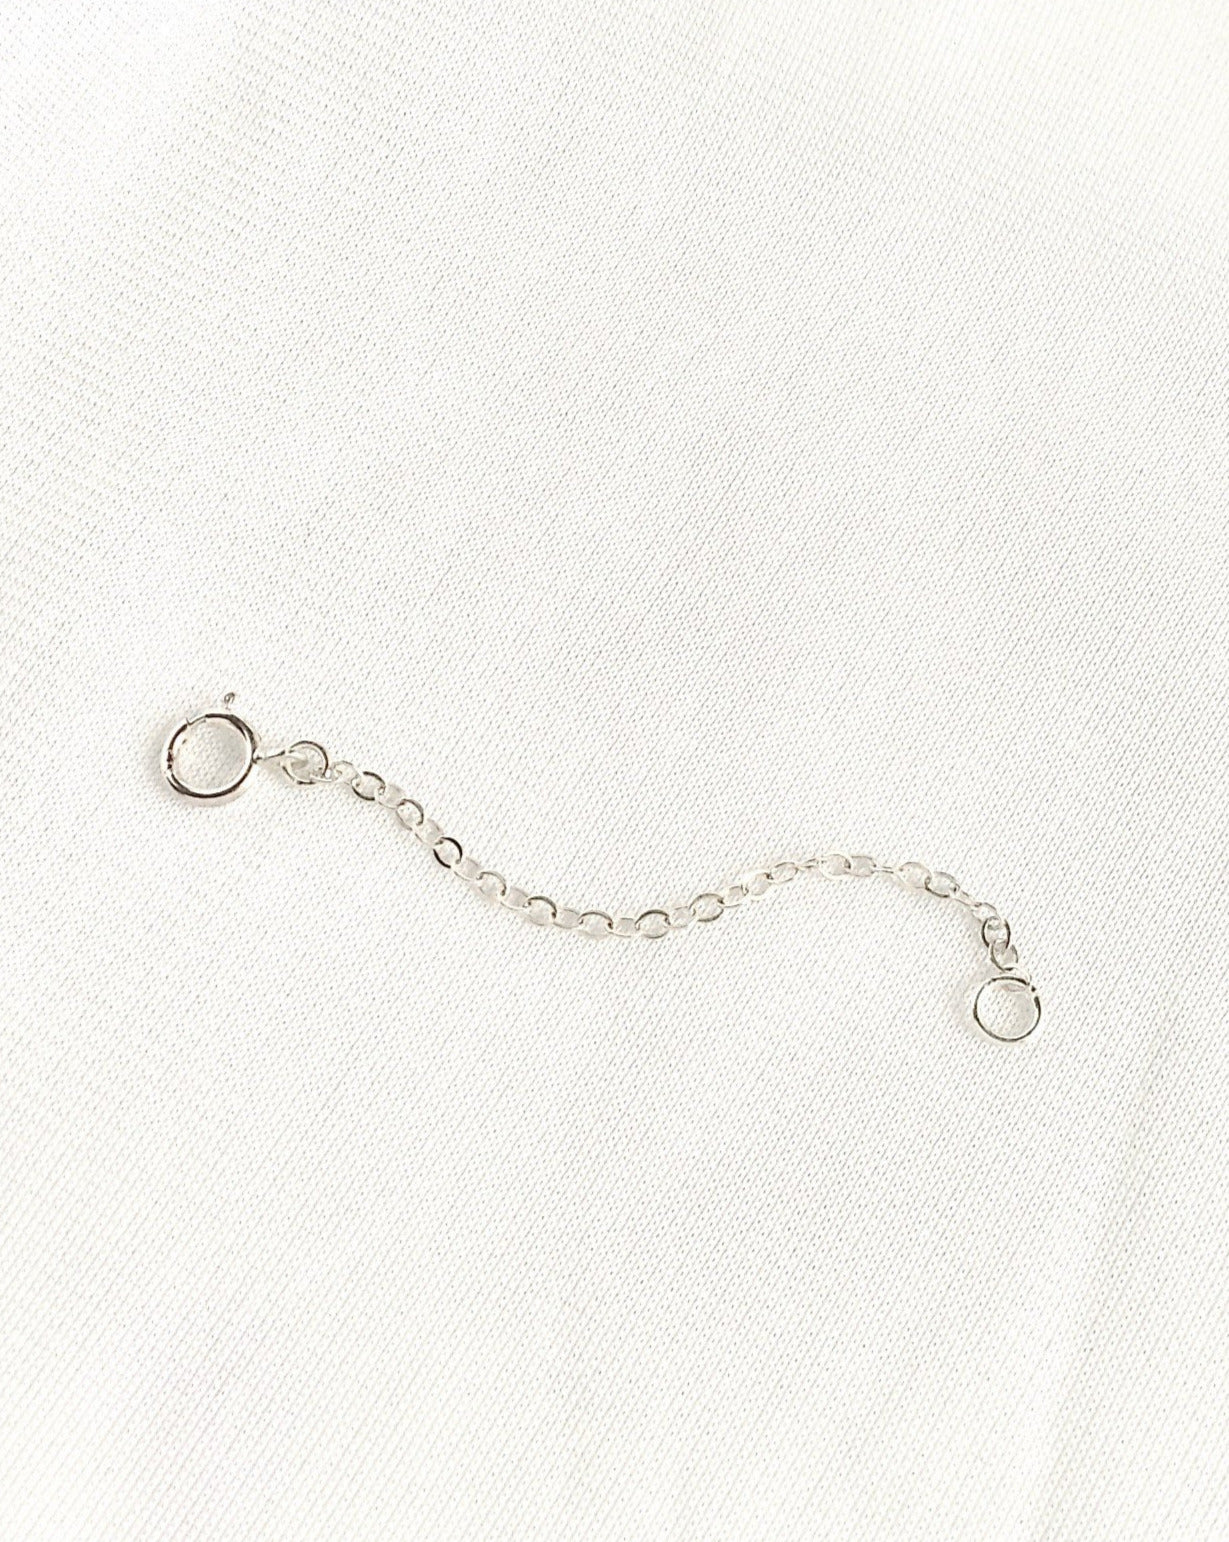 Necklace Chain Extender, Adjustable Bracelet Extension, Removable